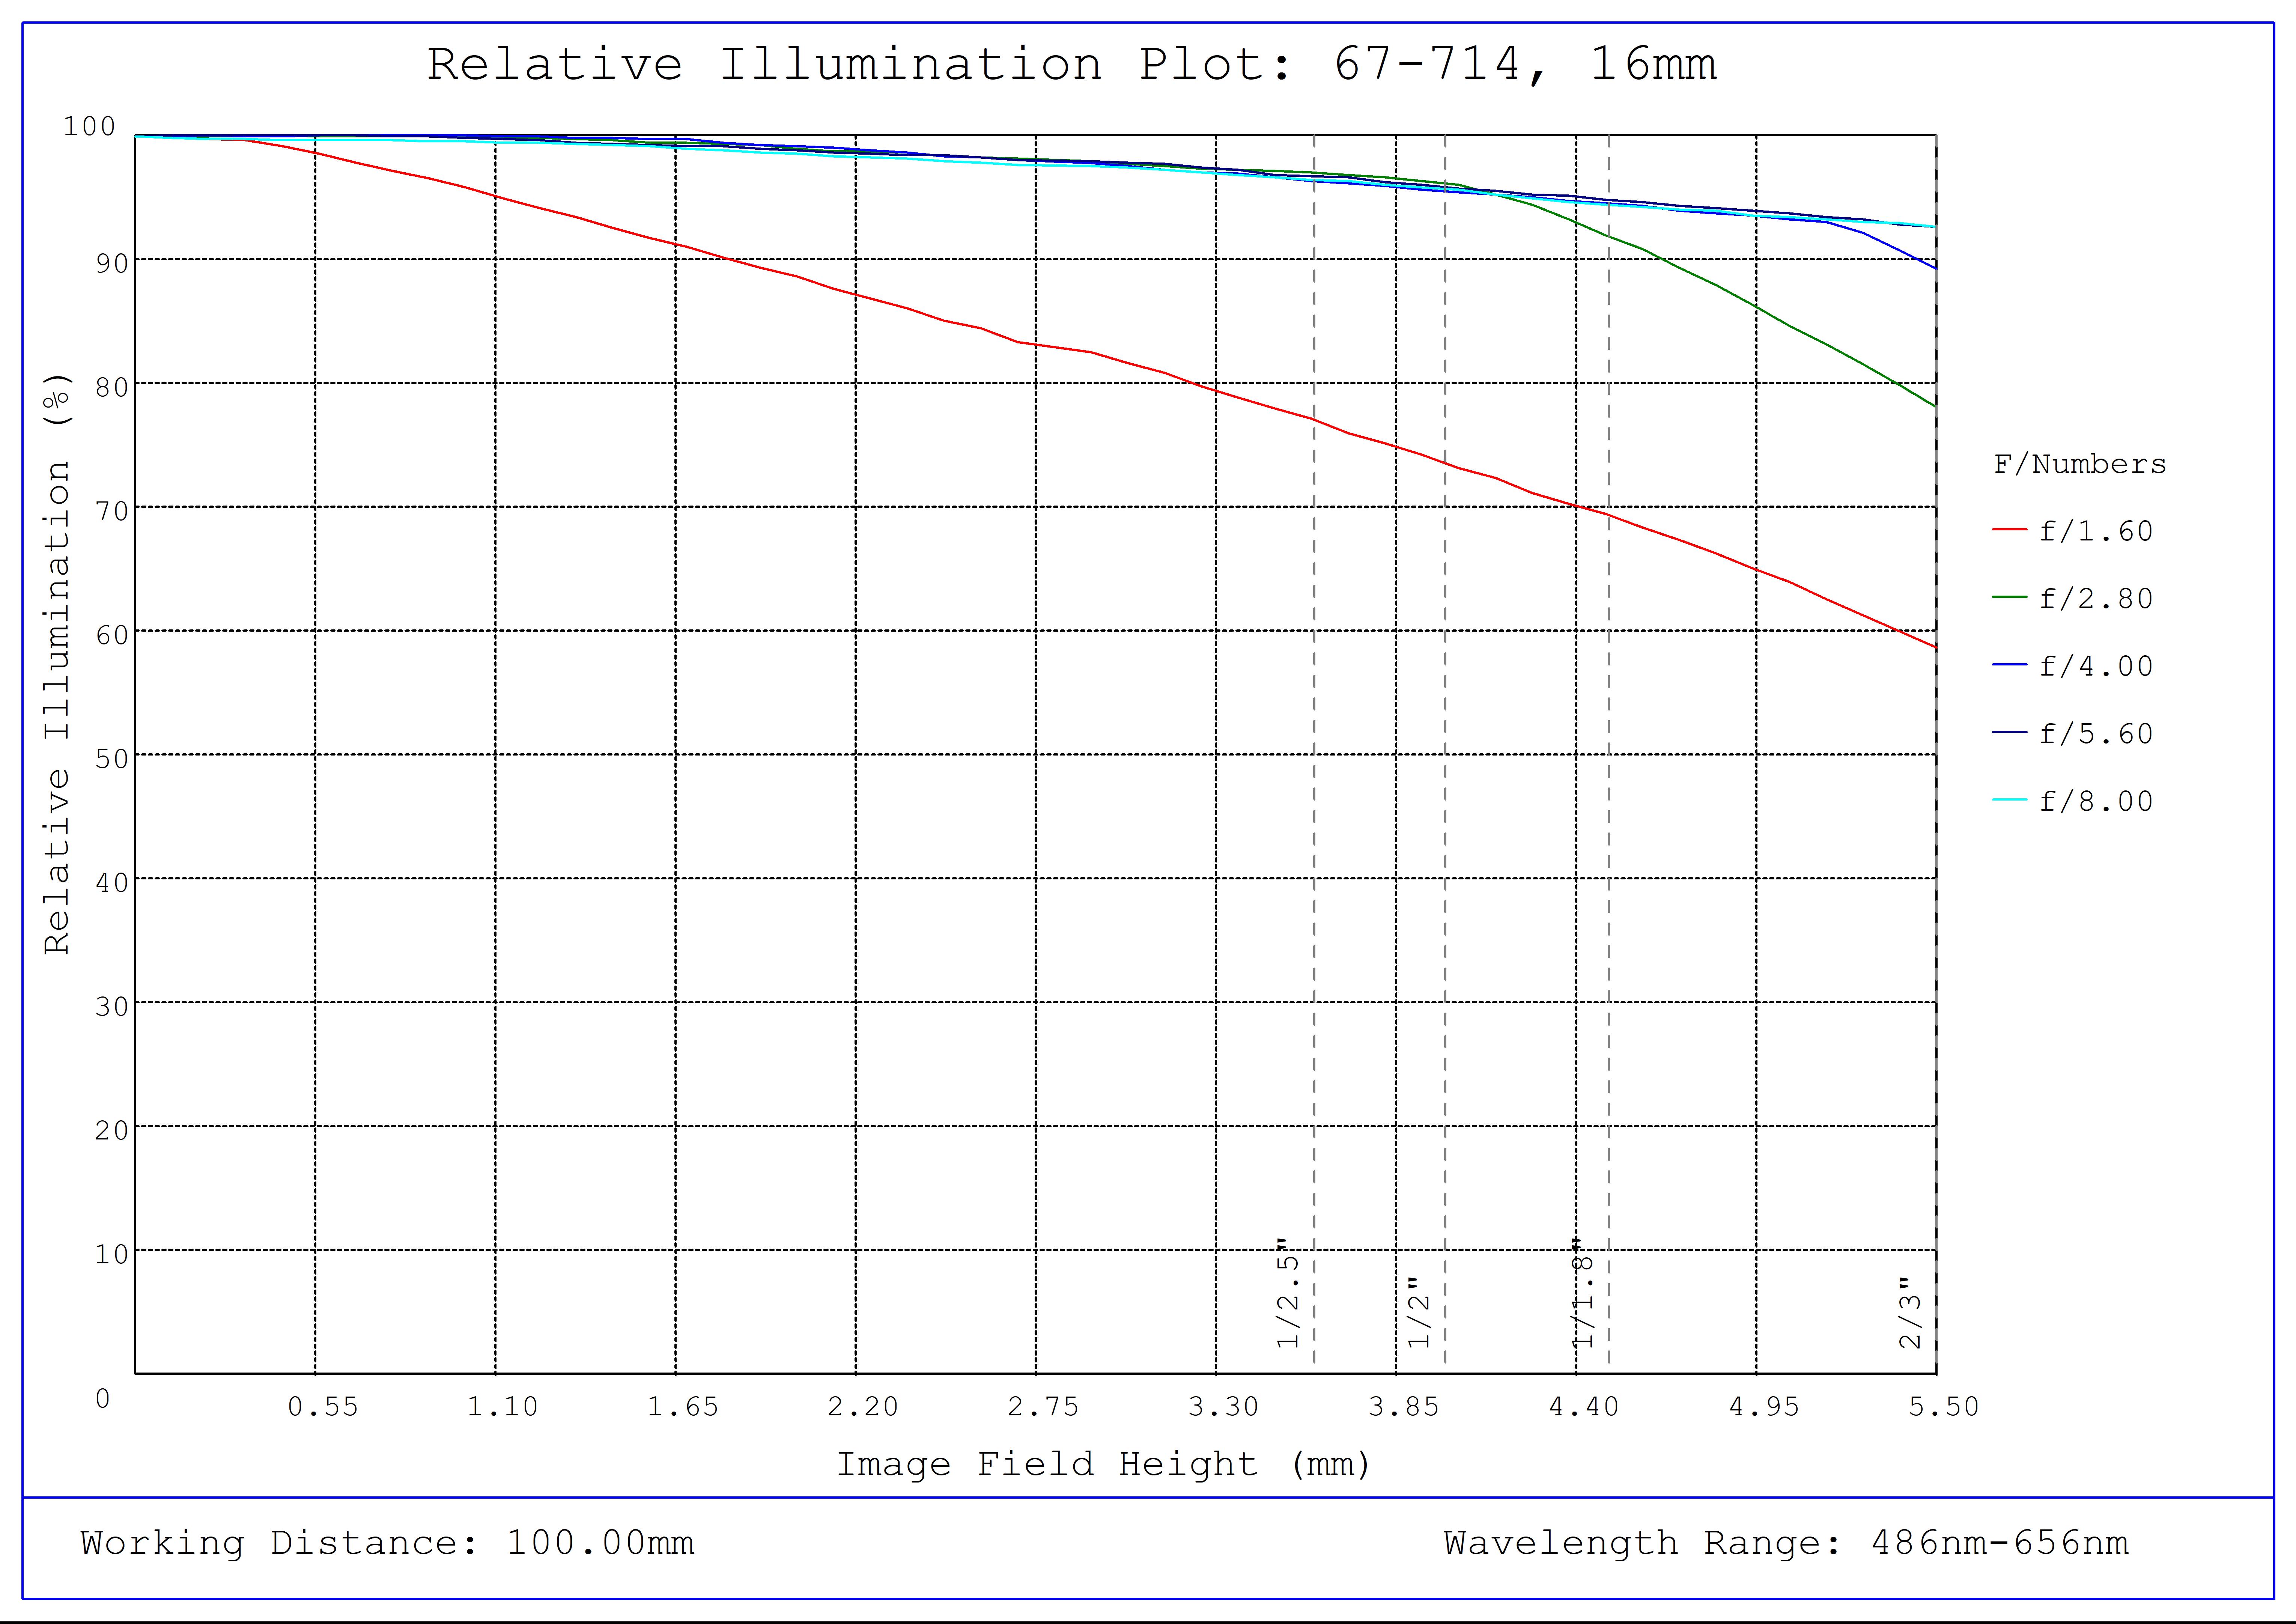 #67-714, 16mm C VIS-NIR Series Fixed Focal Length Lens, Relative Illumination Plot